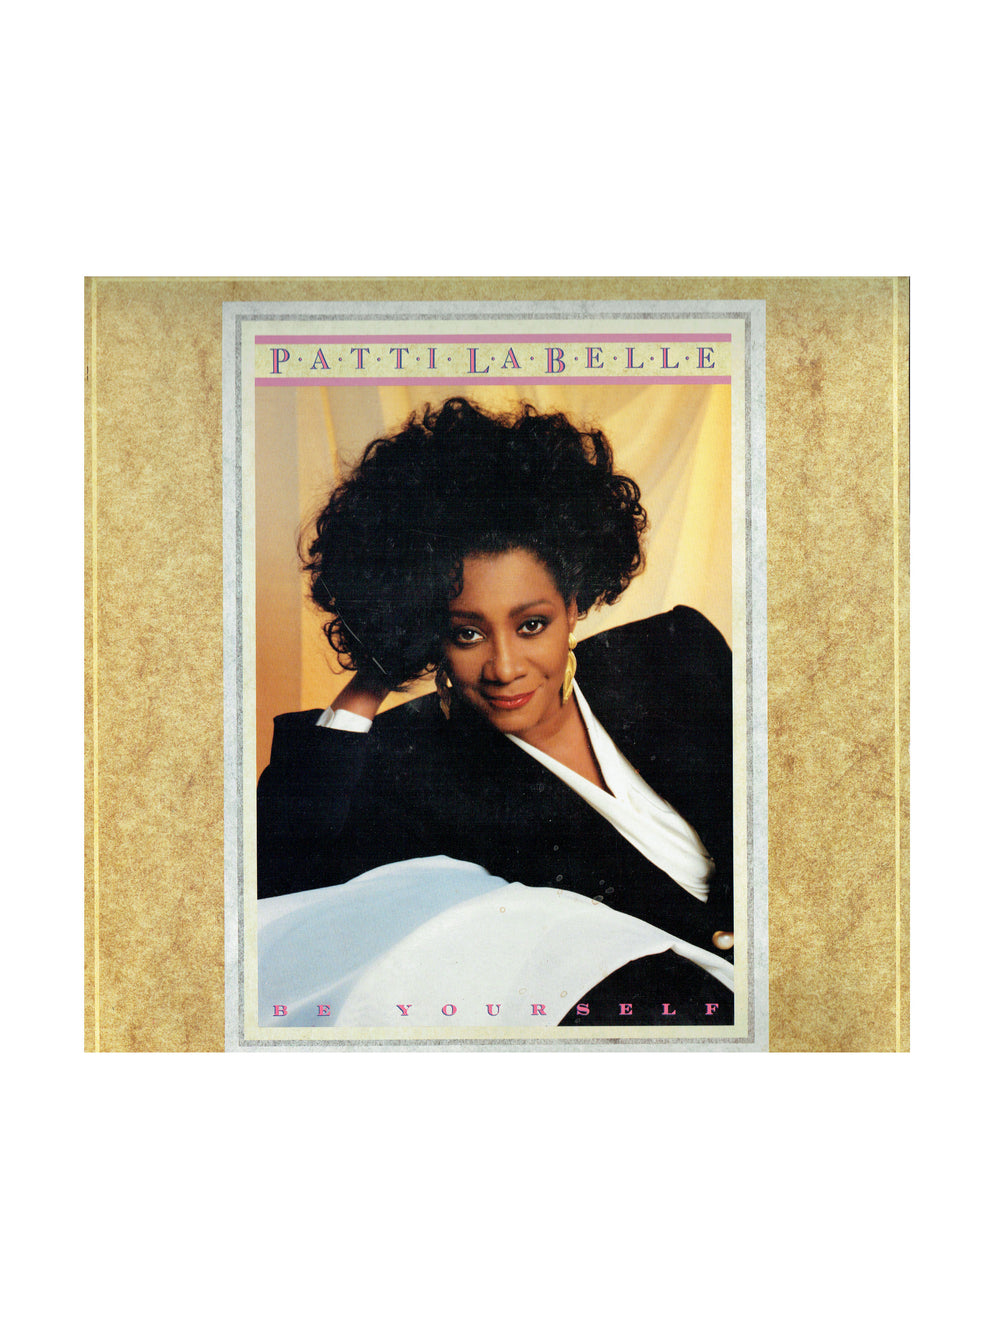 Prince – Patti Labelle Be Yourself CD Album 1989 Release MCA Prince